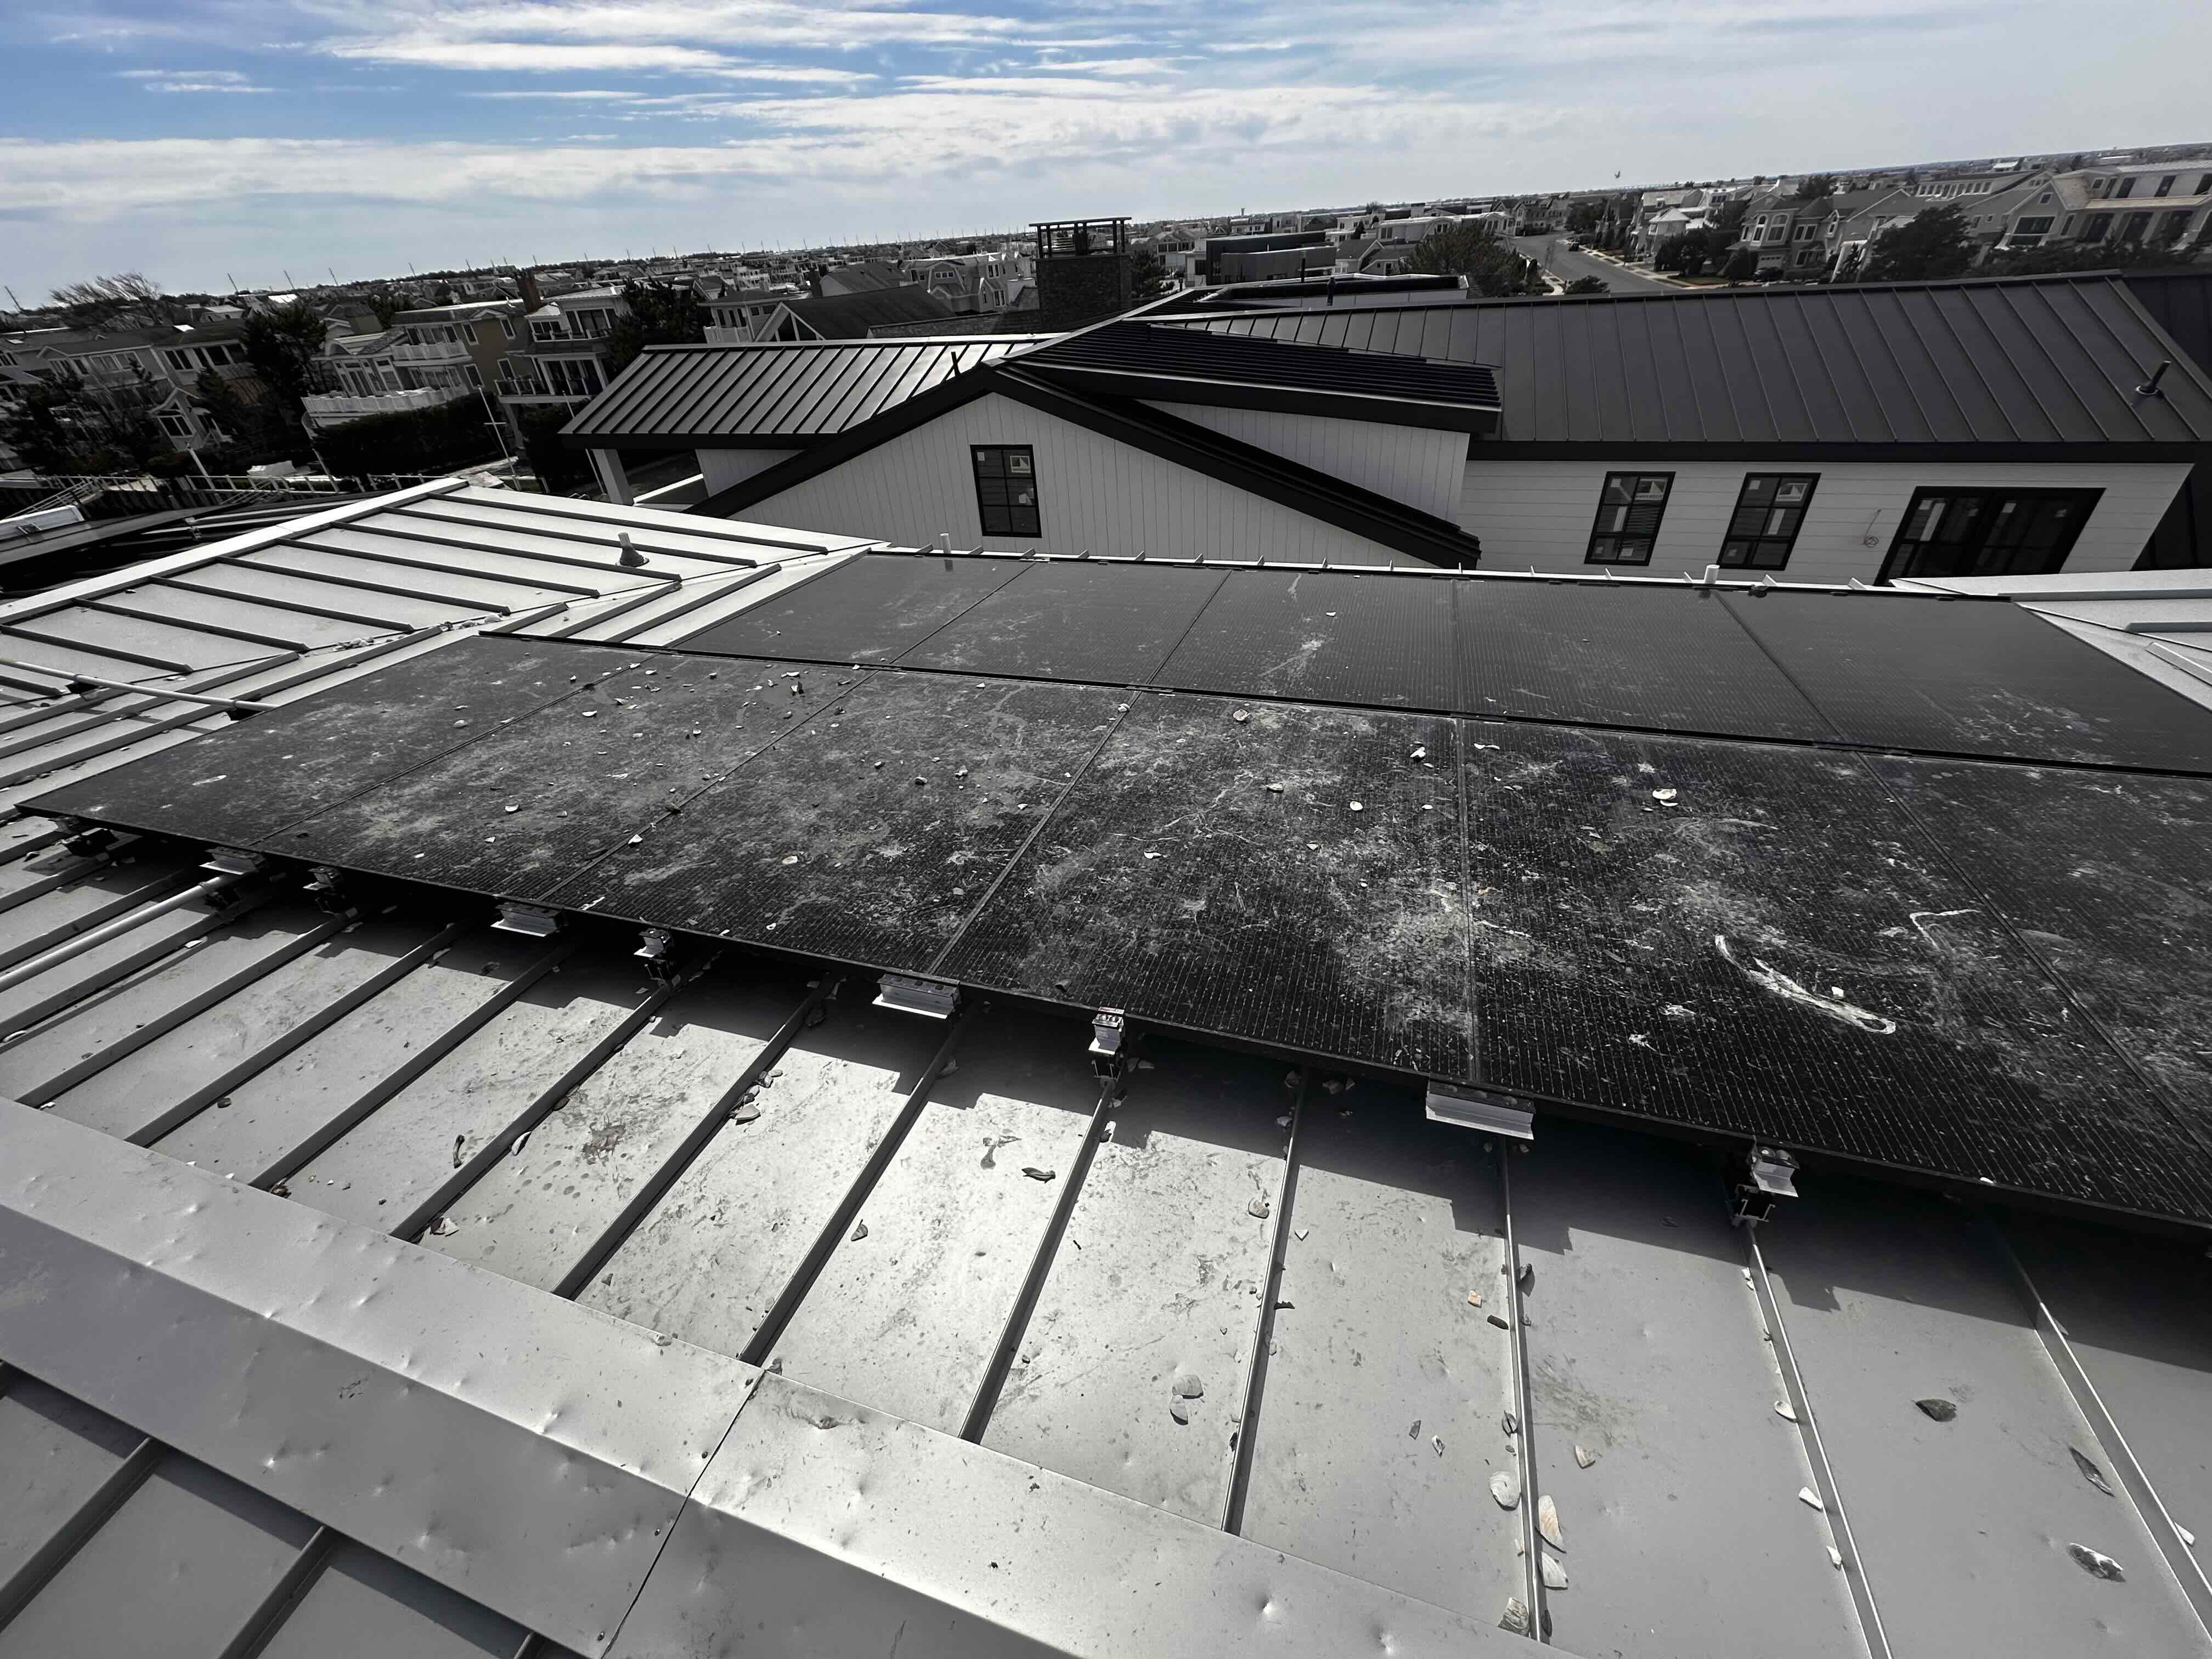 Seagulls drop rocks on solar panels